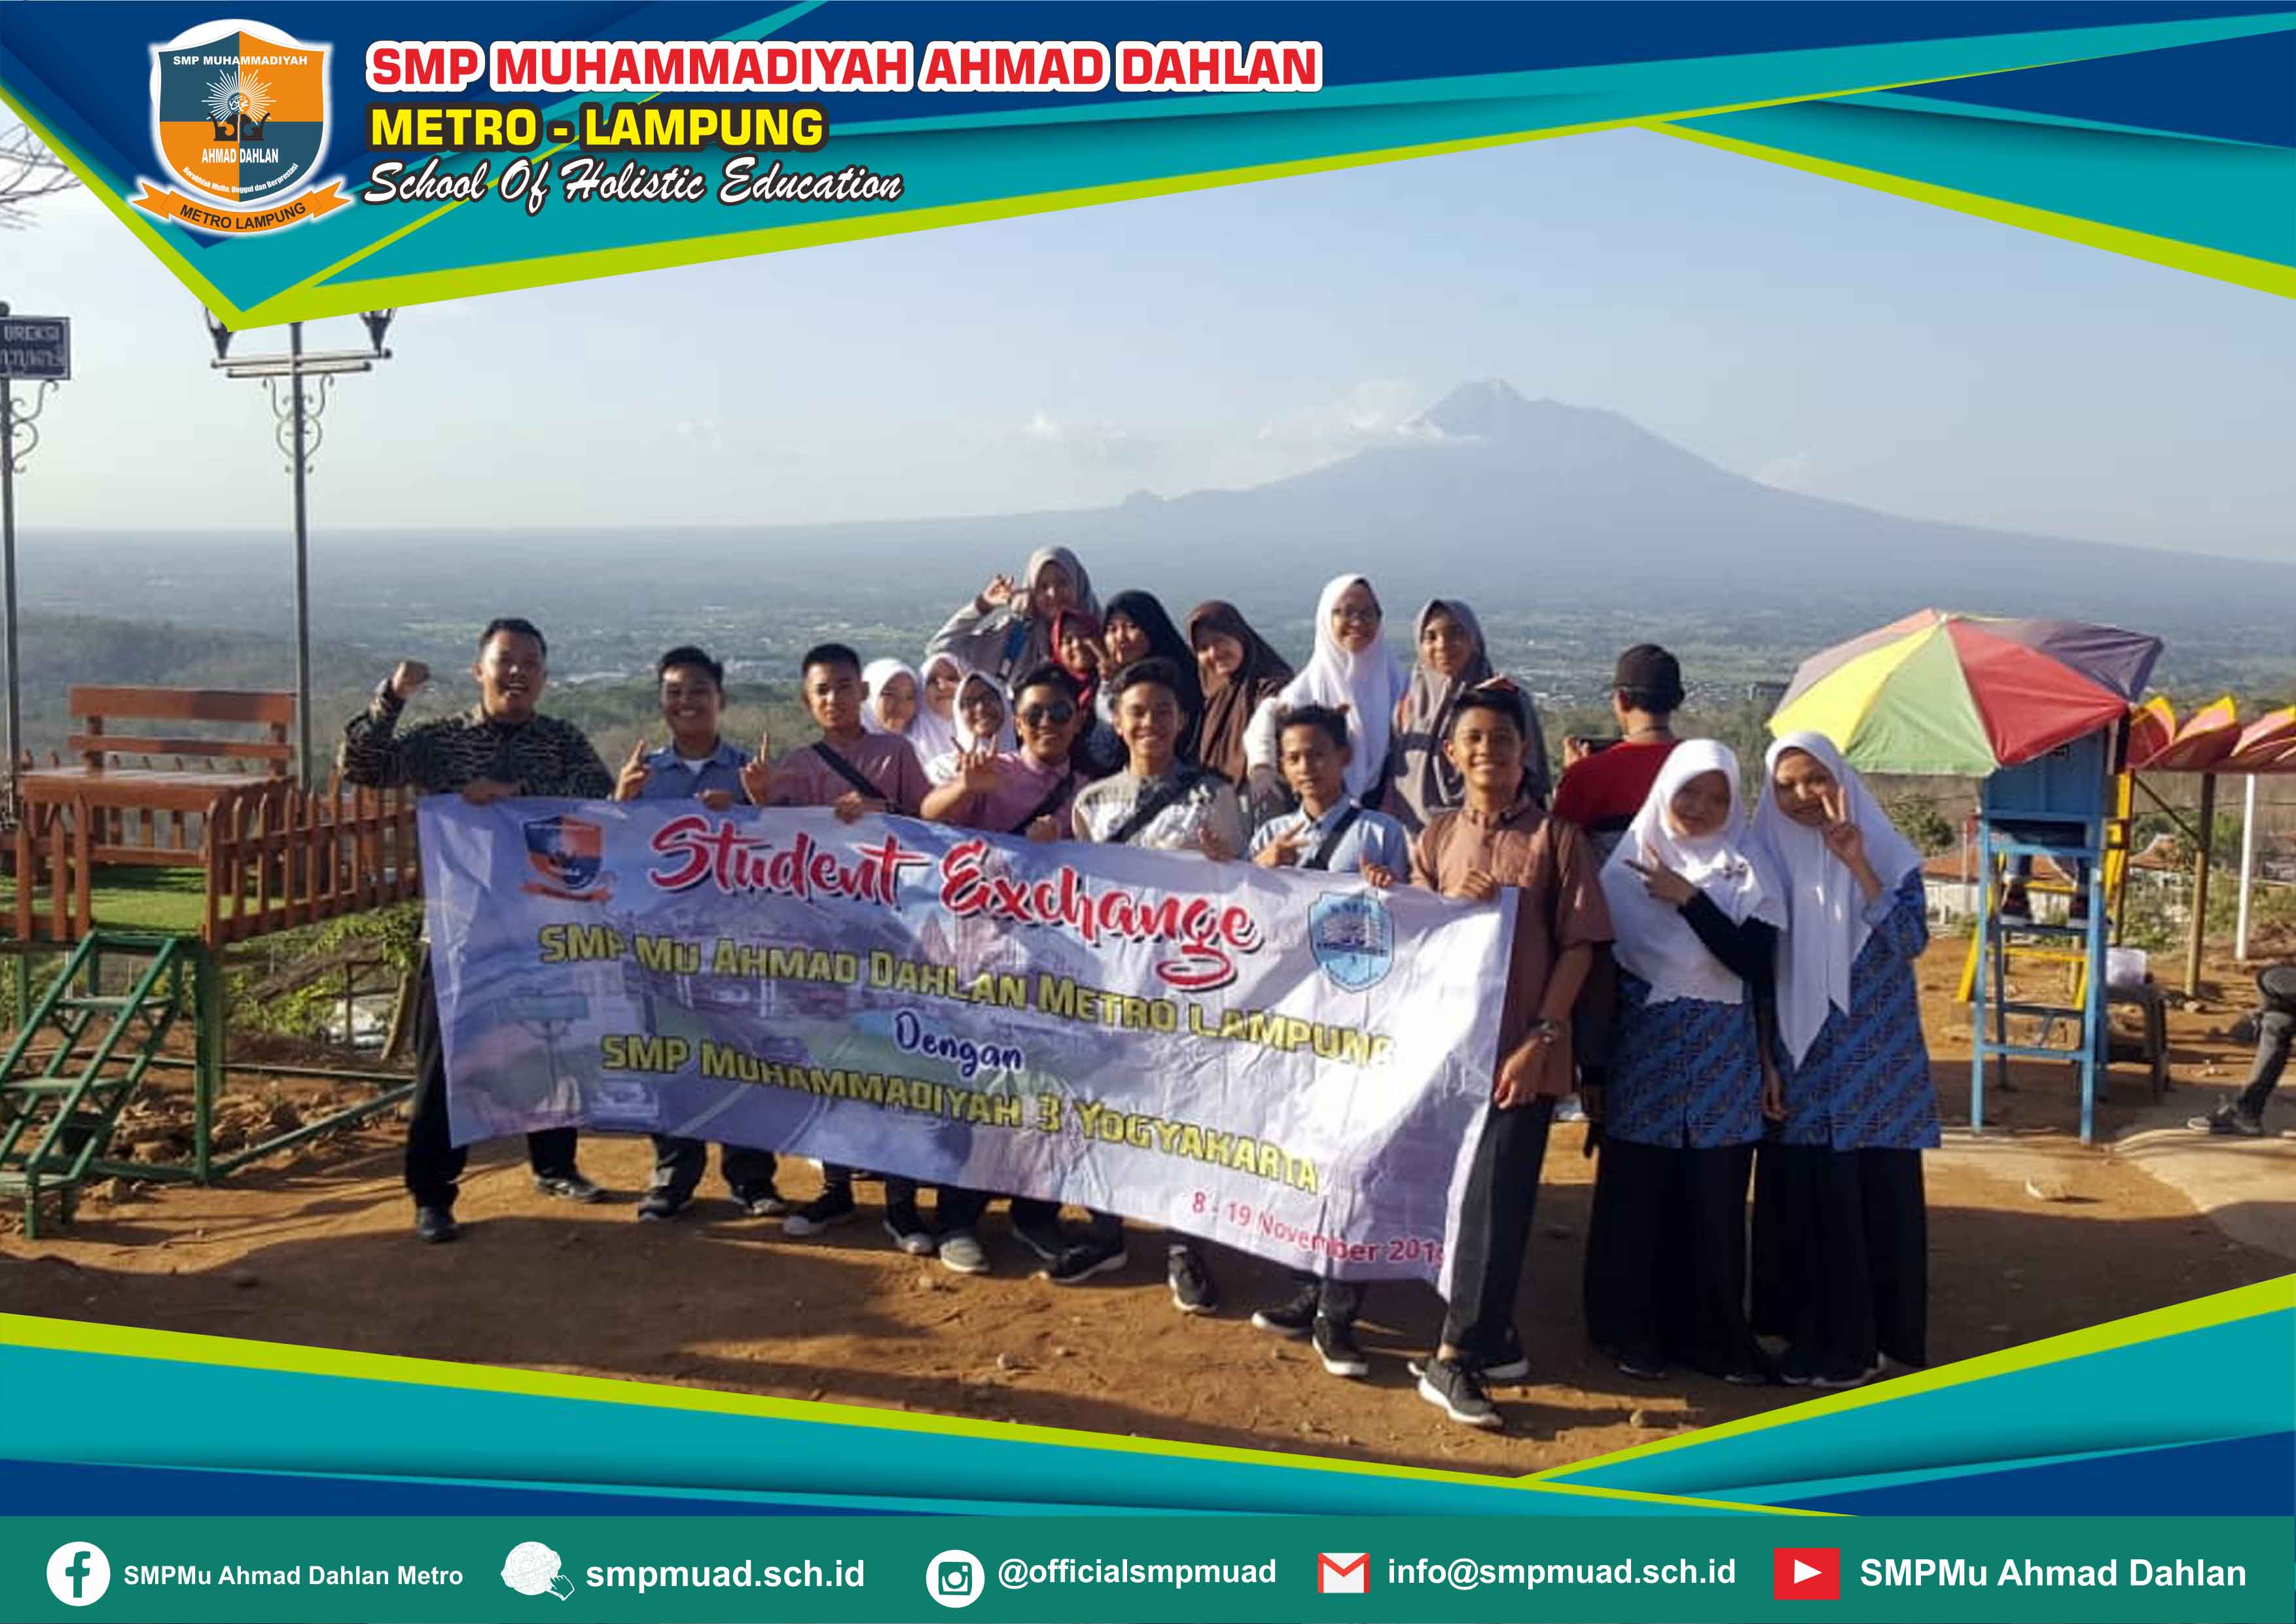 Students Exchange SMP MuGA Day 5 Yogyakarta